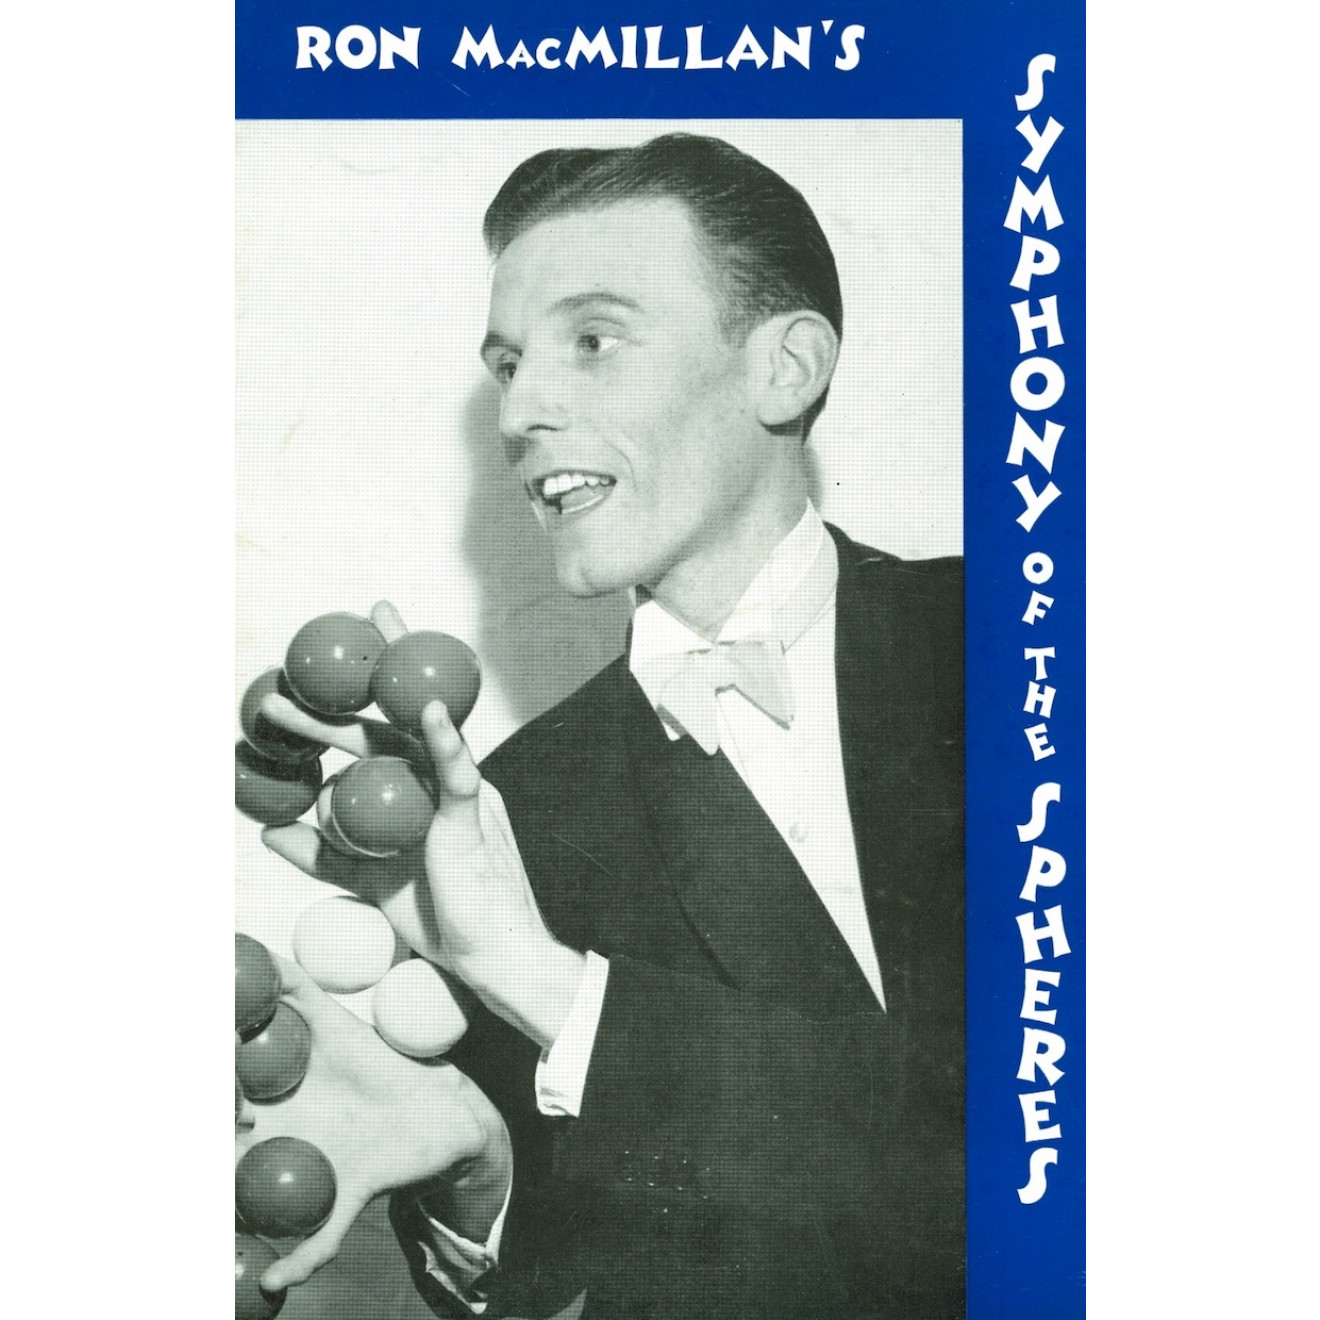 Ron MacMillan's Symphony of the Spheres